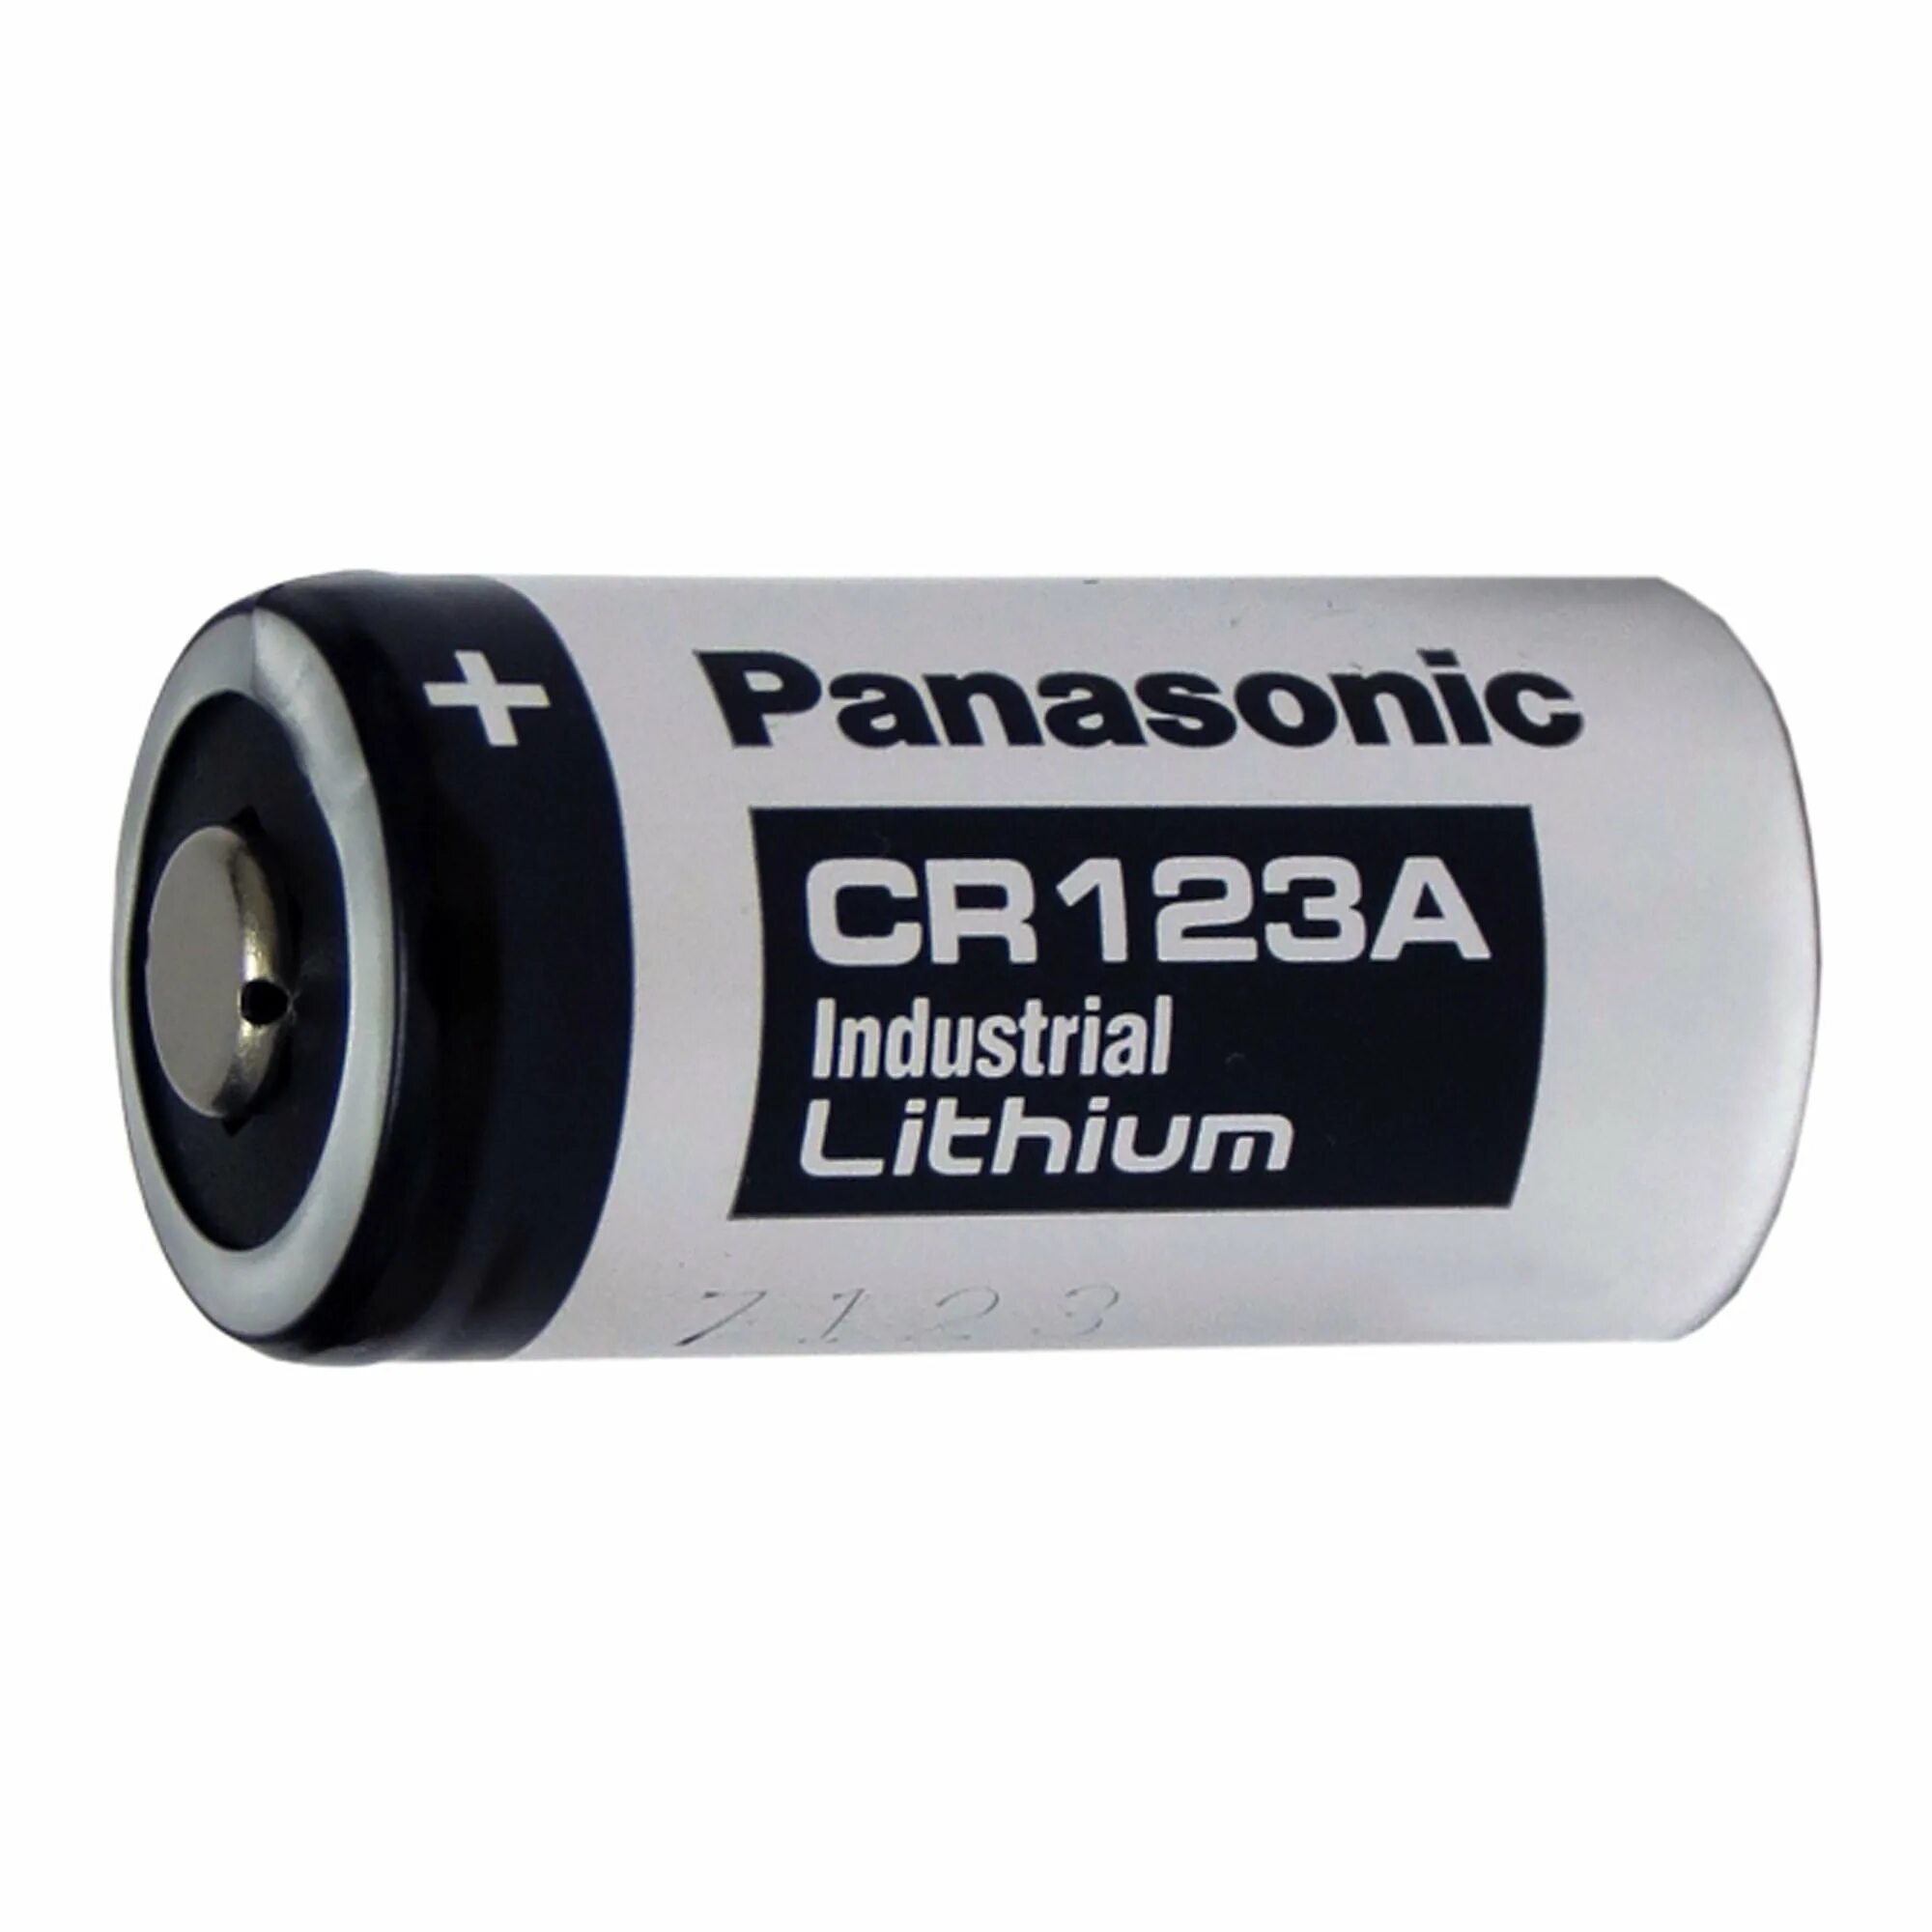 Cr123a батарейка купить. Panasonic cr123a Industrial Lithium. Cr123a батарейка Панасоник литиум. Литиевая батарейка cr123a. Panasonic CR-123 Lithium.